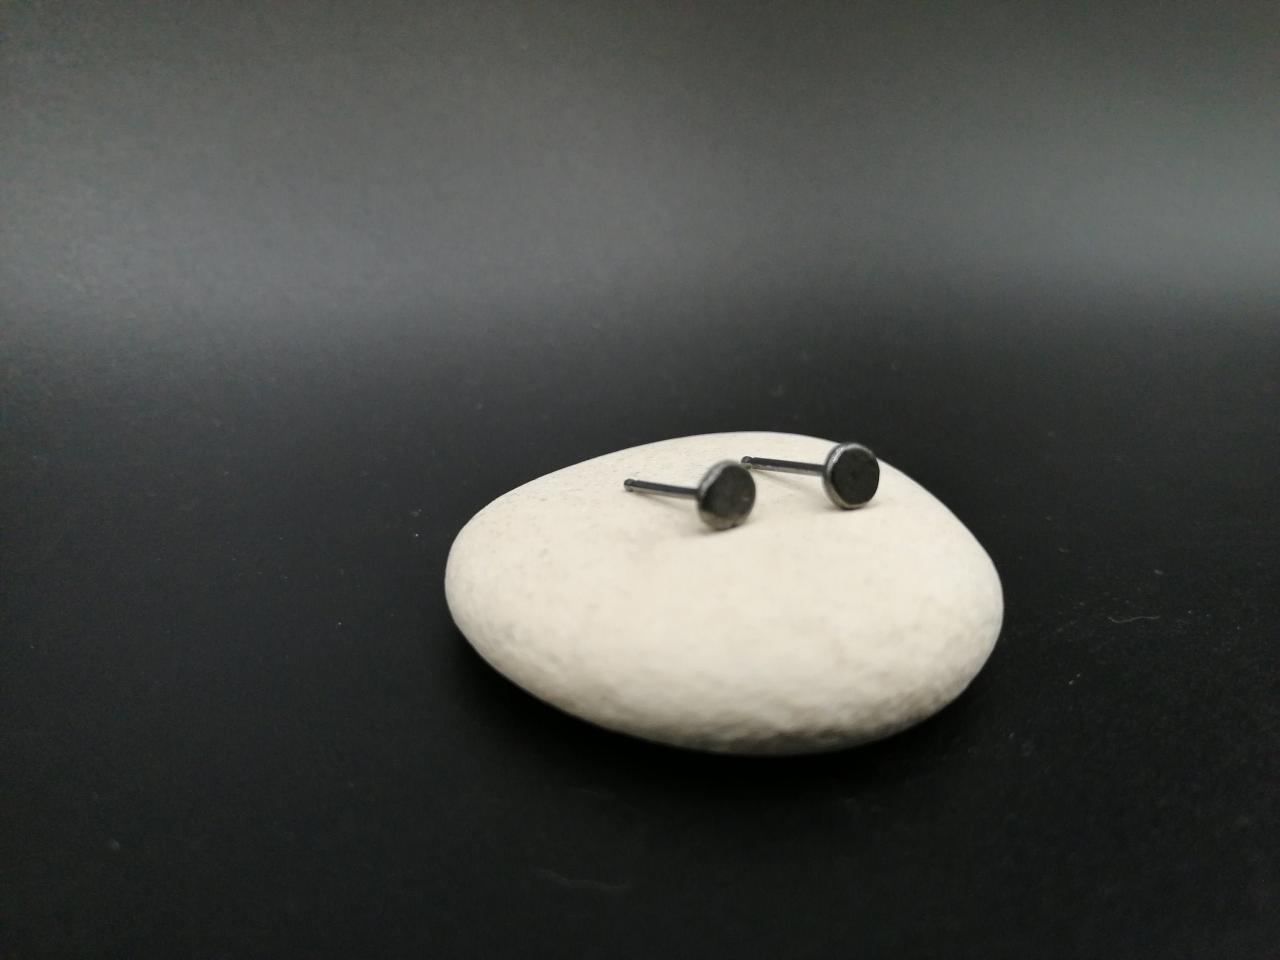 Mens Earrings Dark Silver Nail Dot Stud Earrings Minimalist Small Sterling Silver Unisex Posts Gift For Him Black Earrings 4mm Cartilage